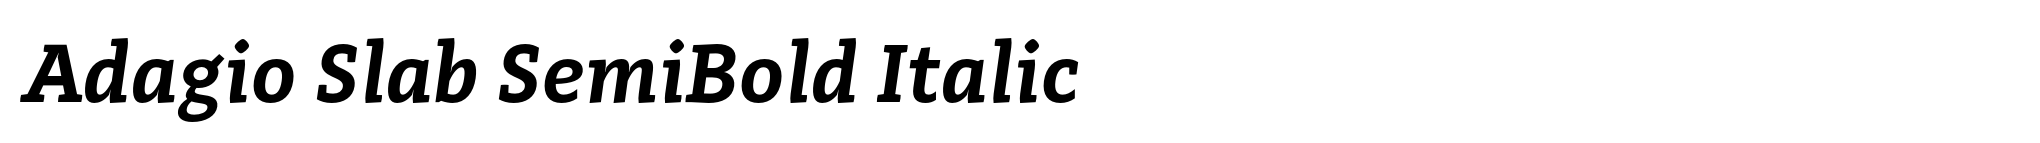 Adagio Slab SemiBold Italic image